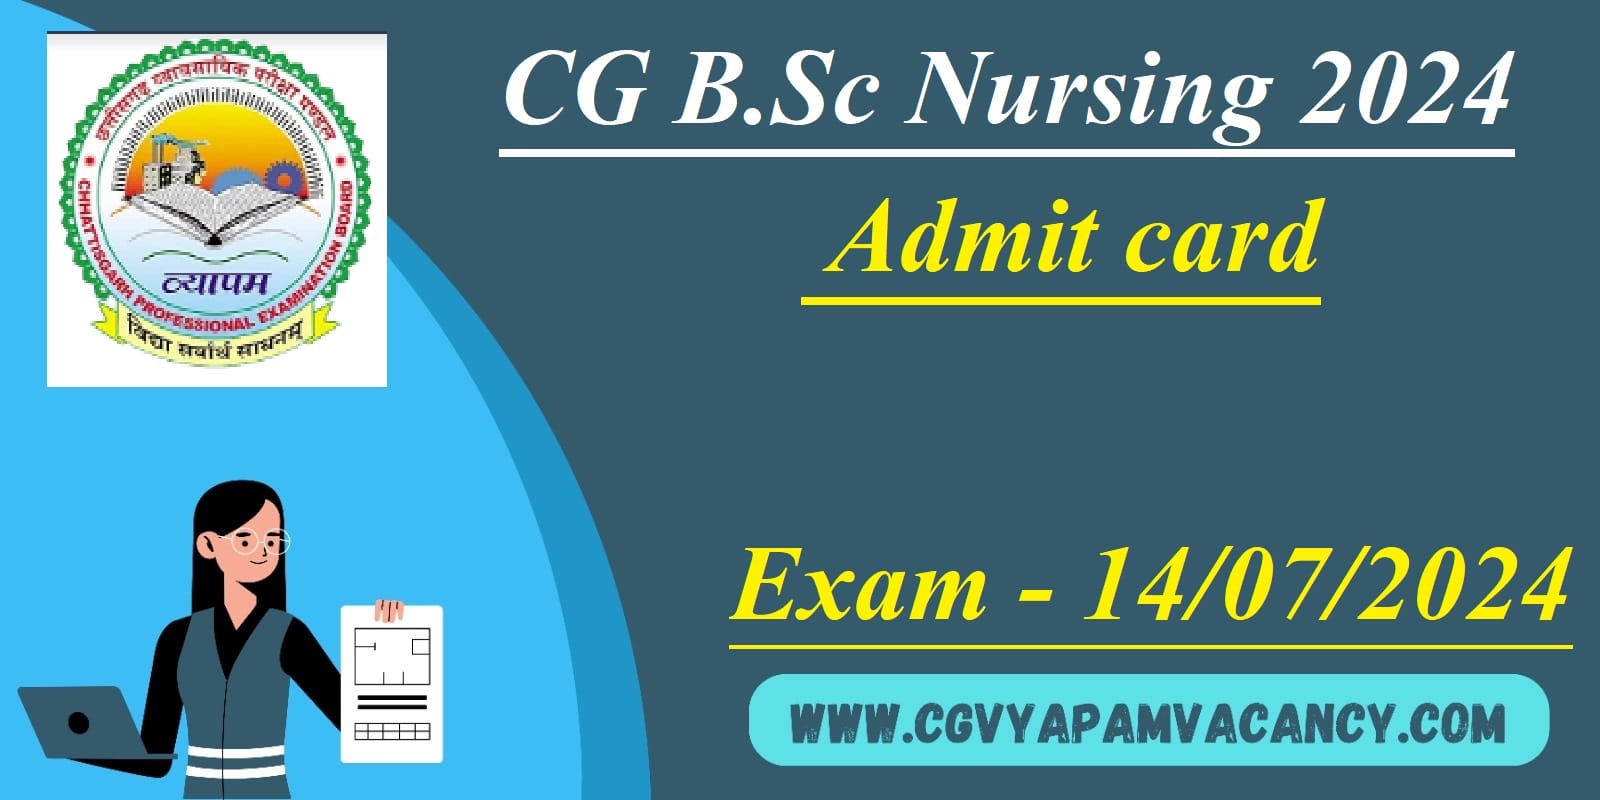 CG B.Sc Nursing Admit card 2024